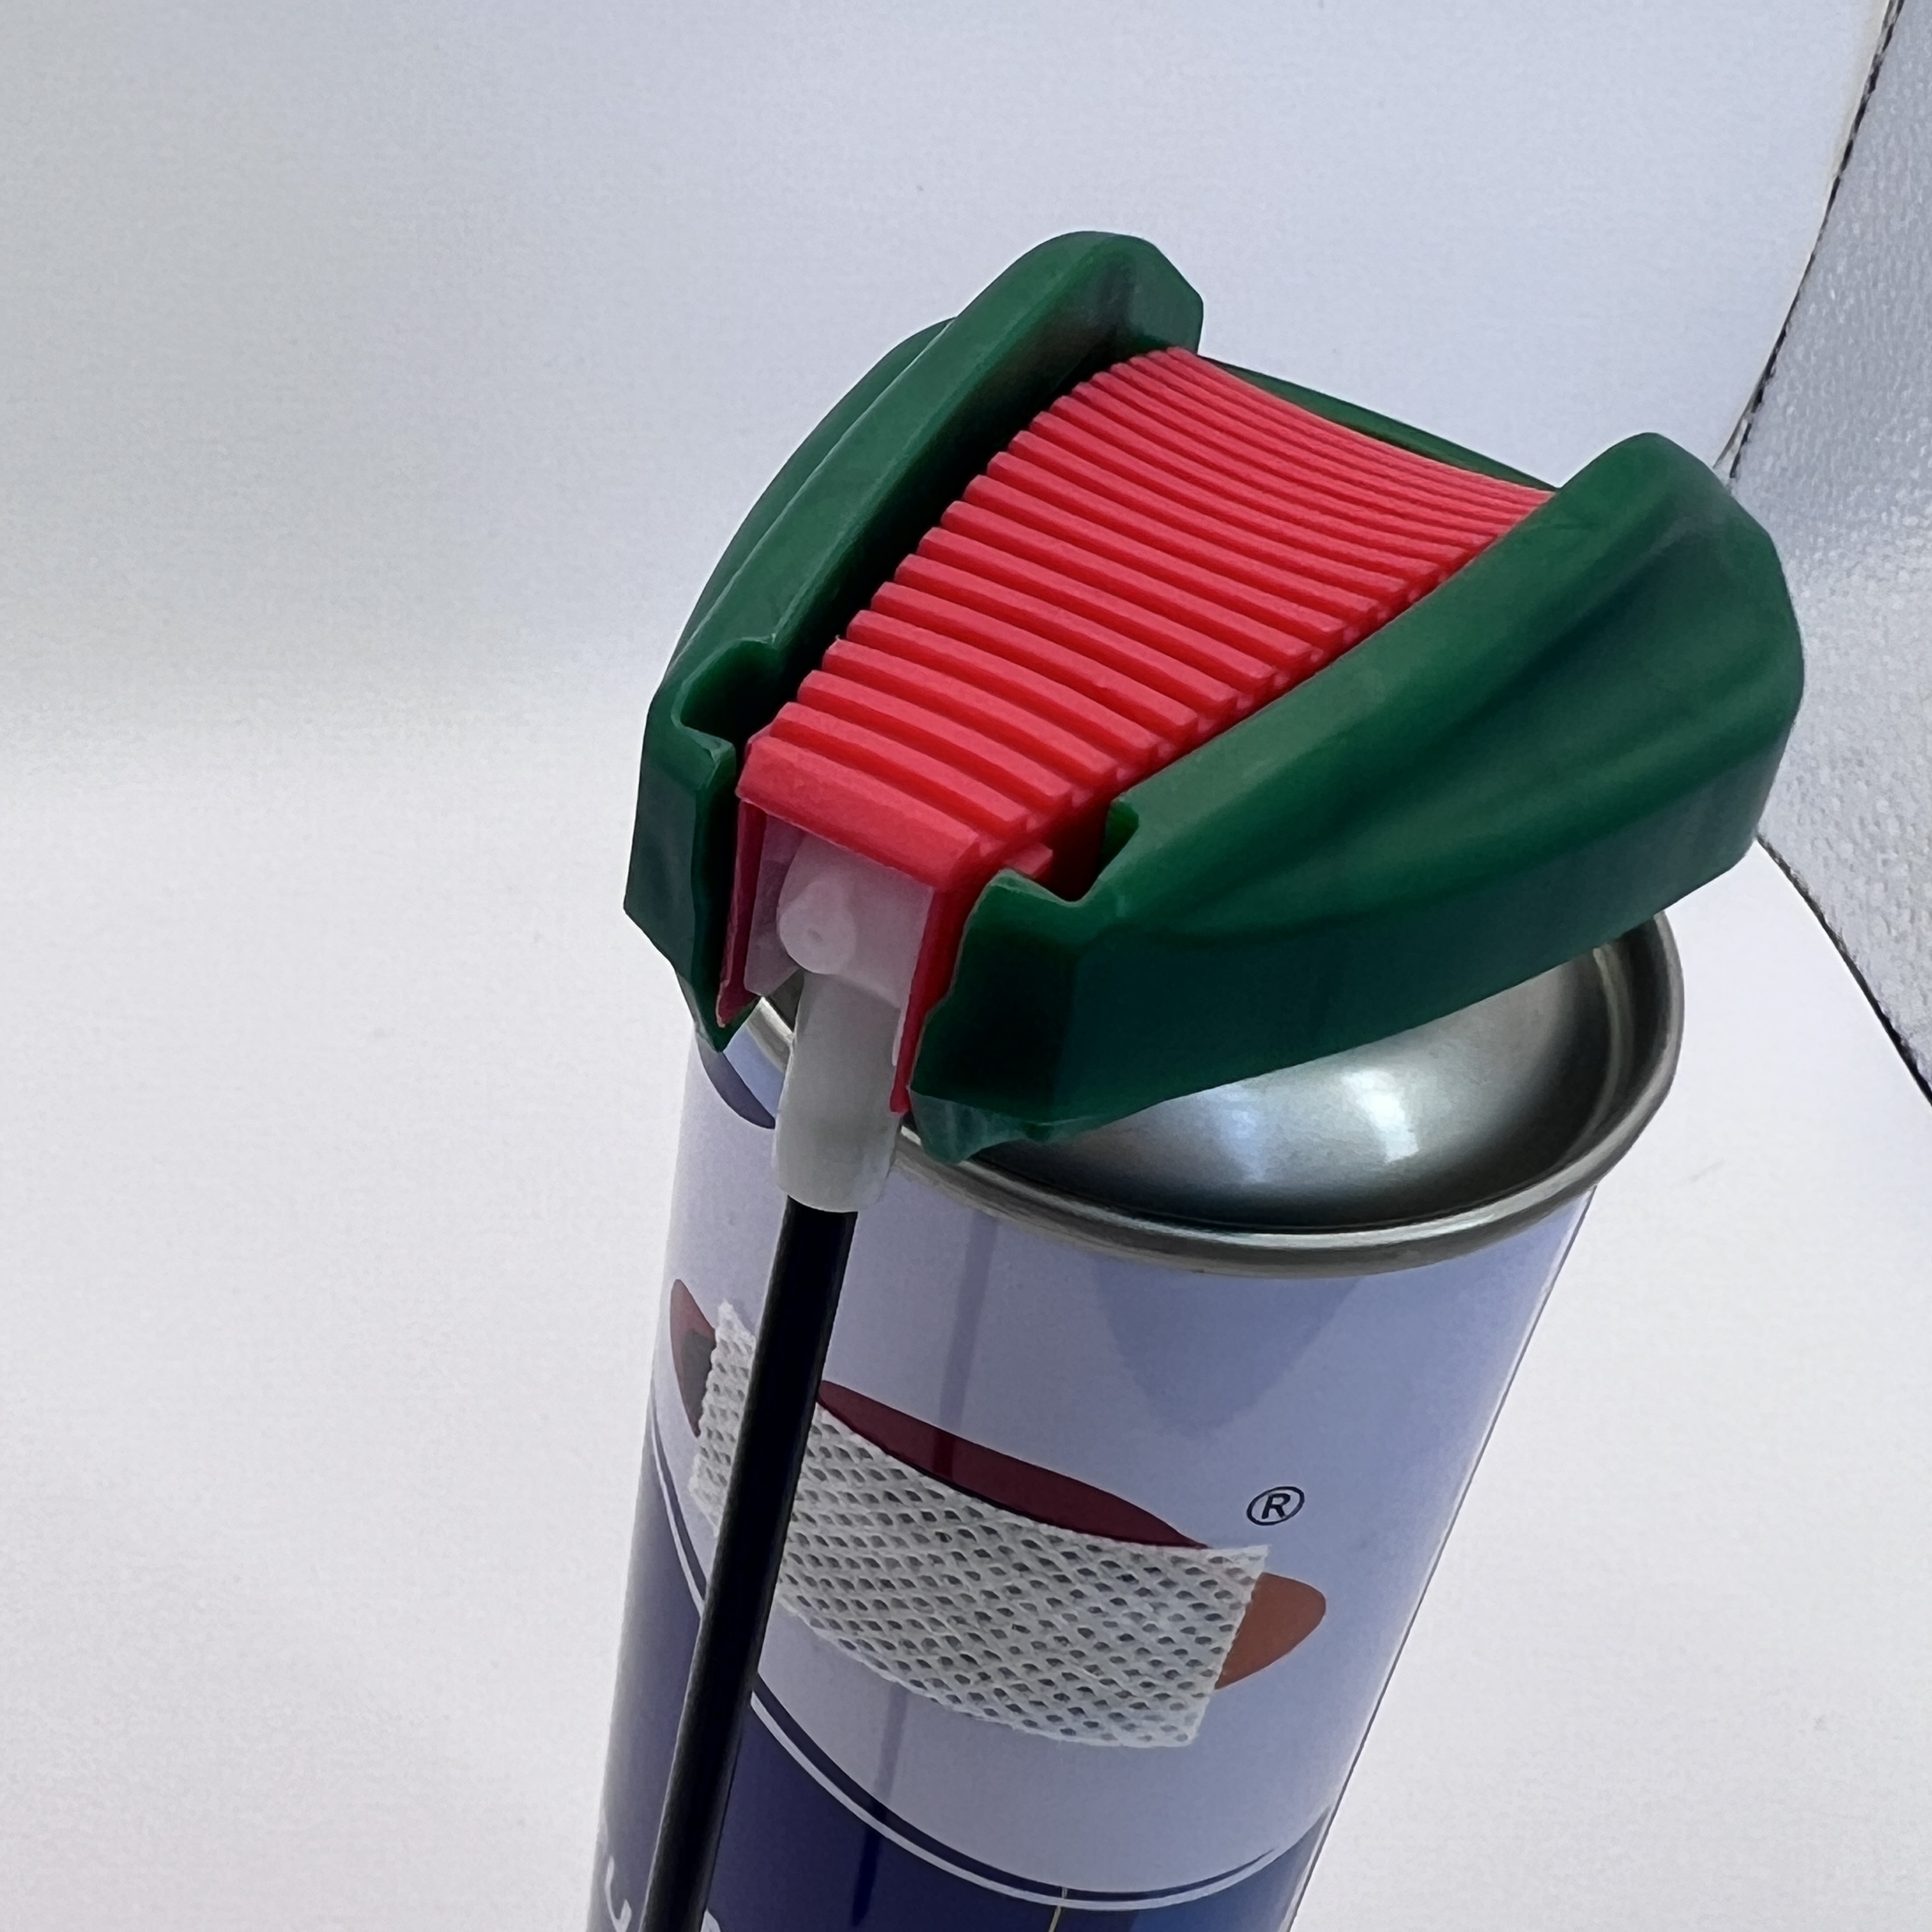 Adjustable Aerosol Spray Nozzle for Gardening - Versatile and Efficient